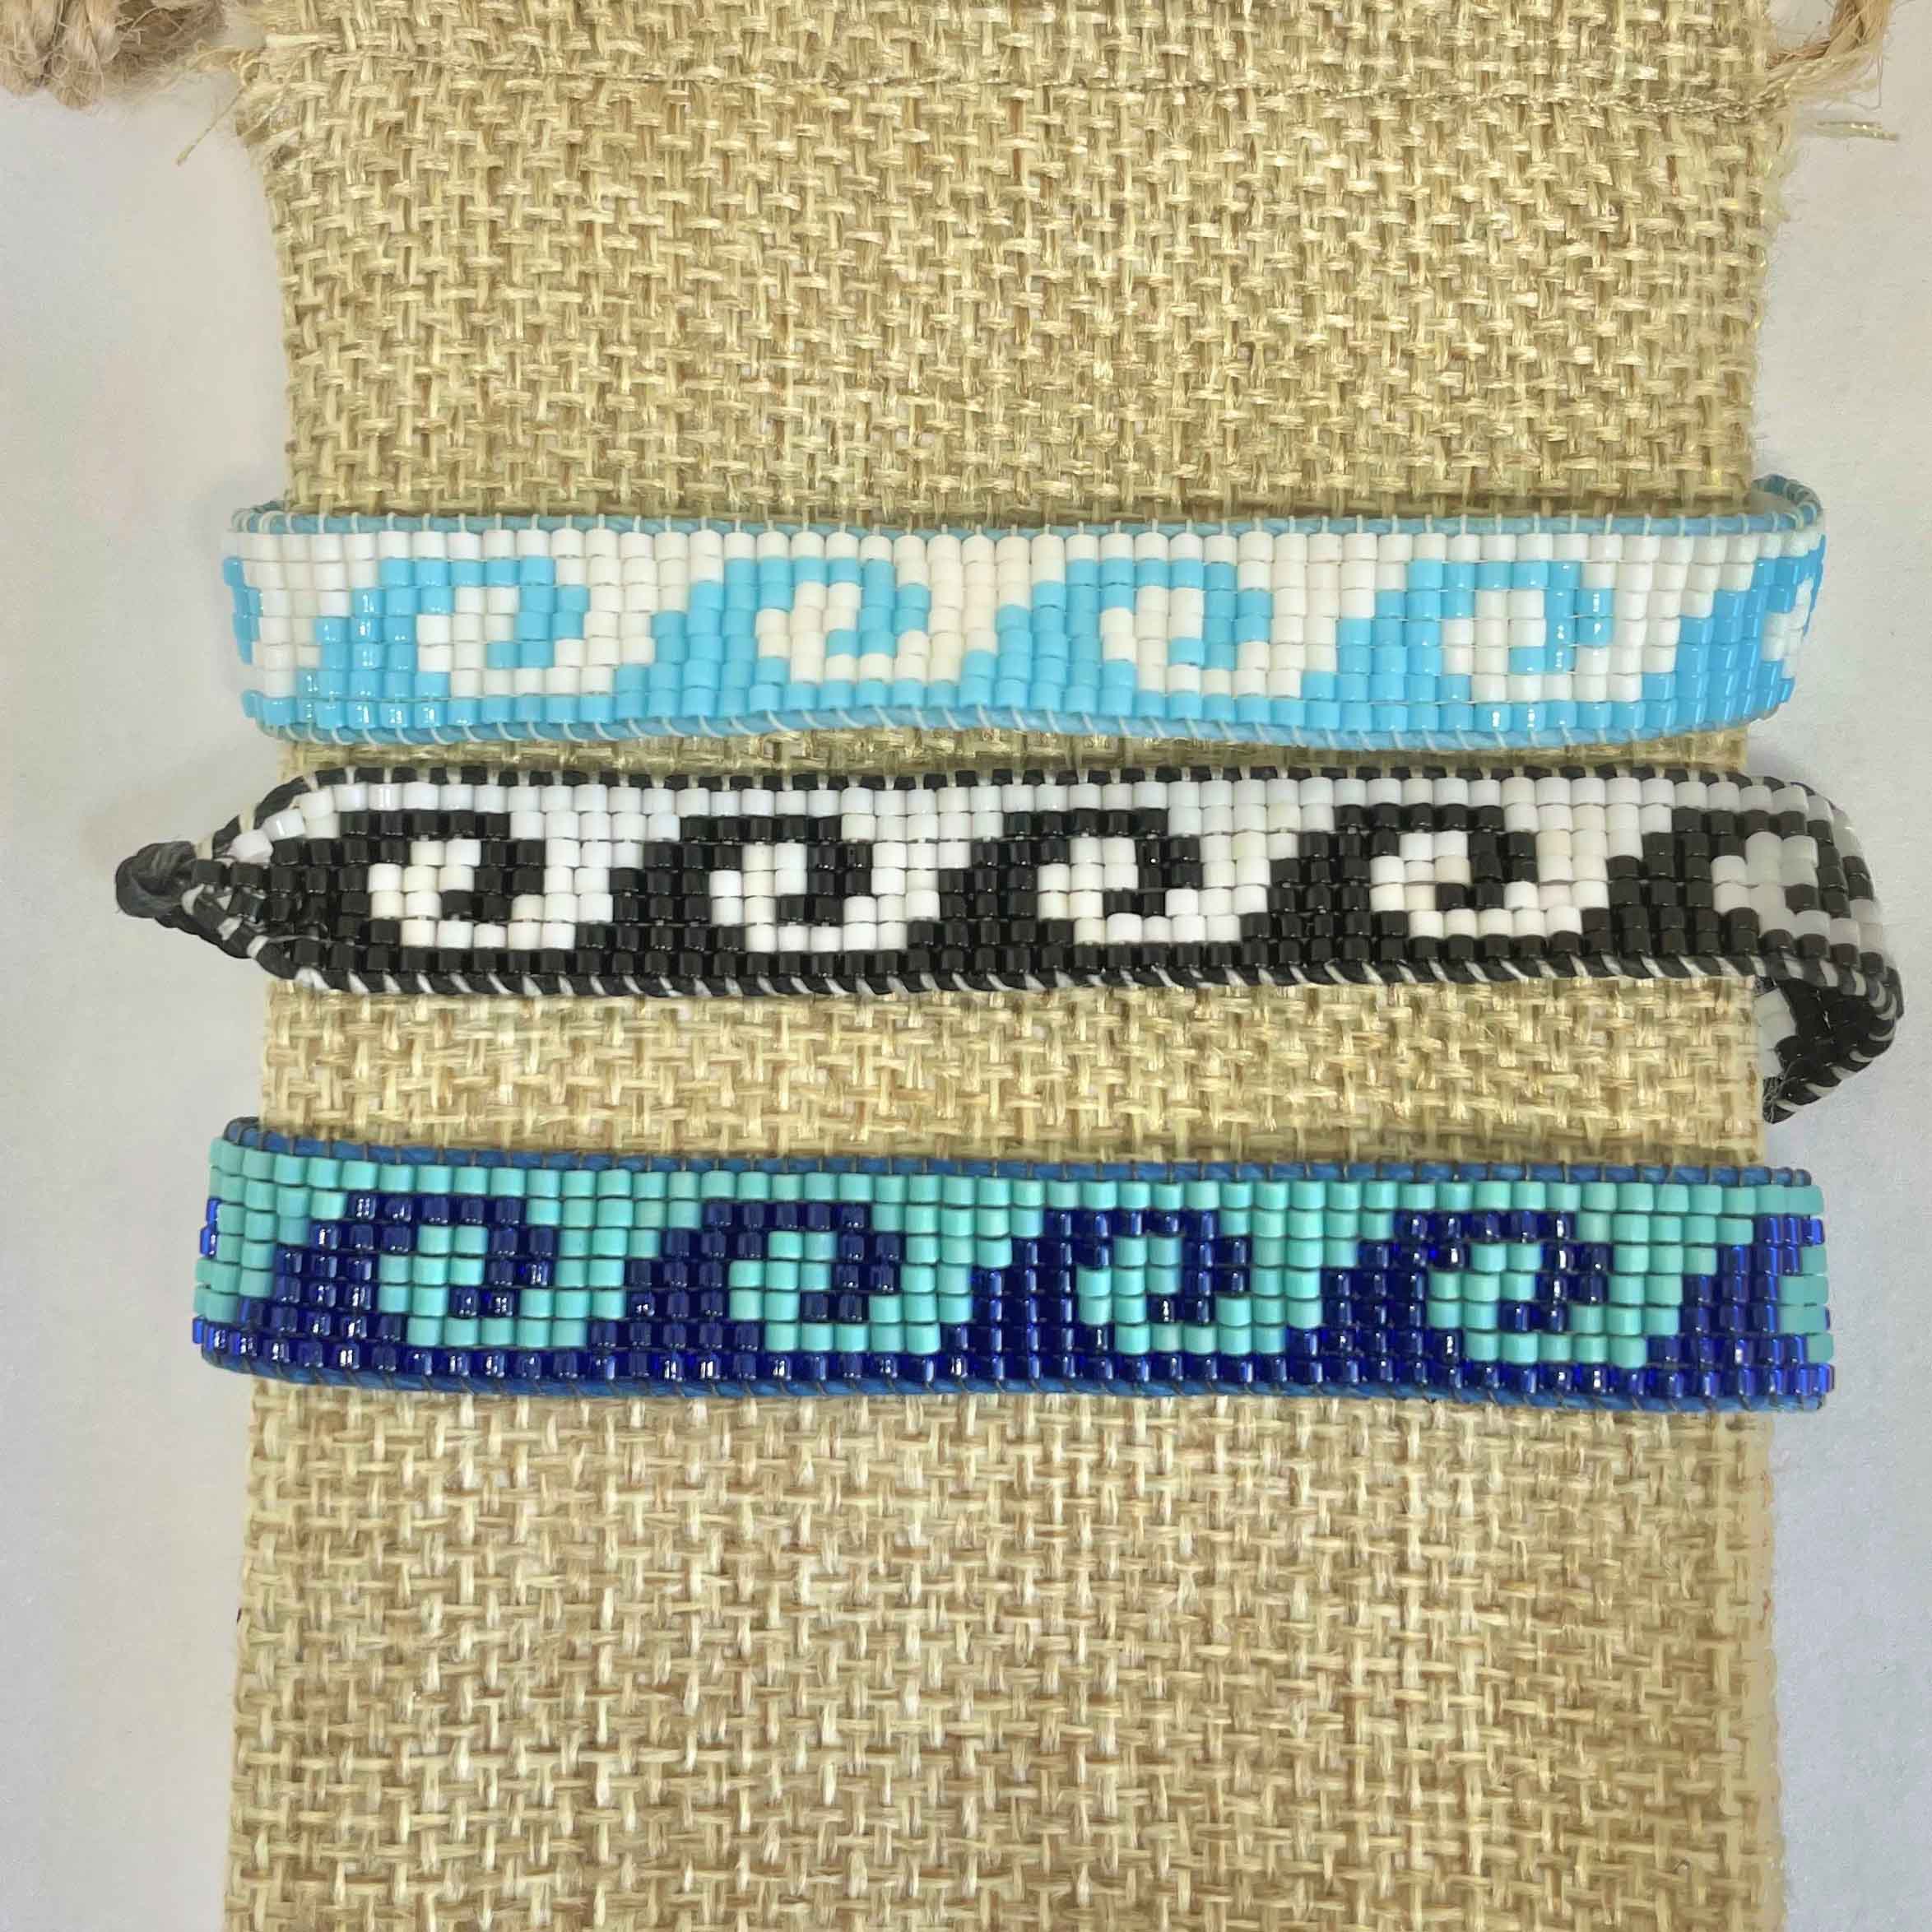 Wave Bracelet / Woven Loom Adjustable Waterproof Bracelet/ Made in